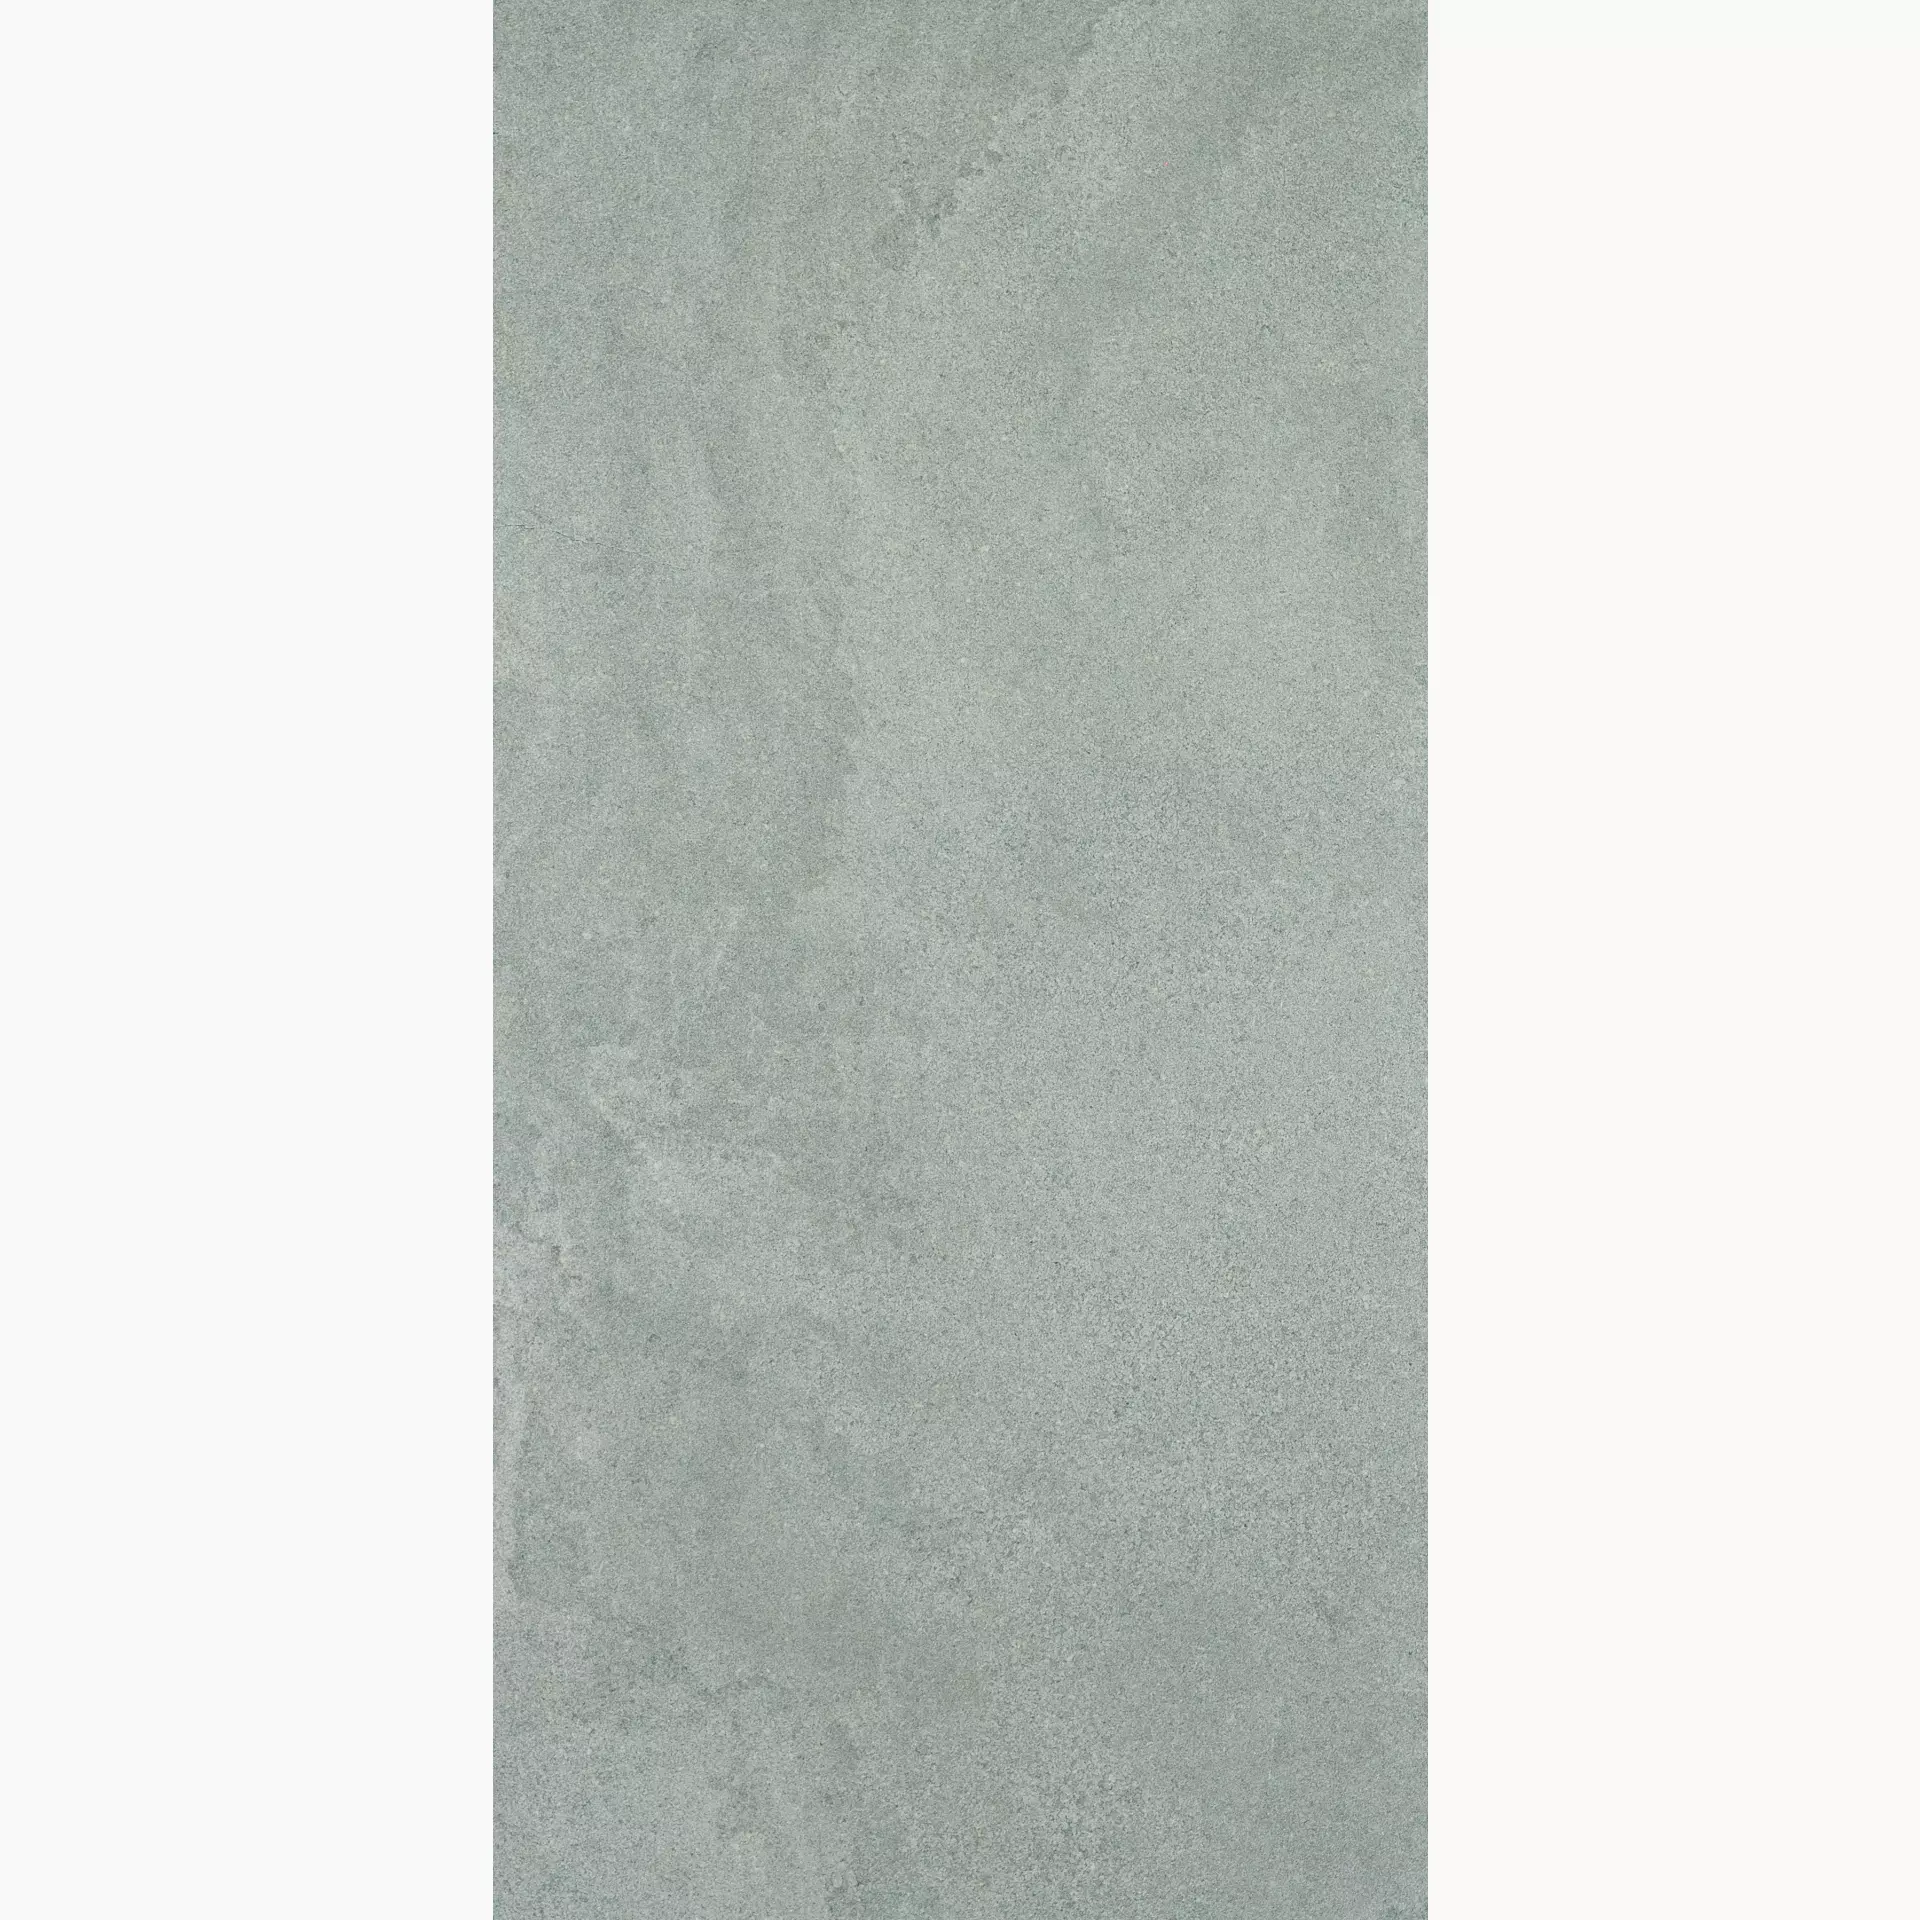 Ergon Stone Project Grey Naturale Controfalda E1CJ 60x120cm rectified 9,5mm